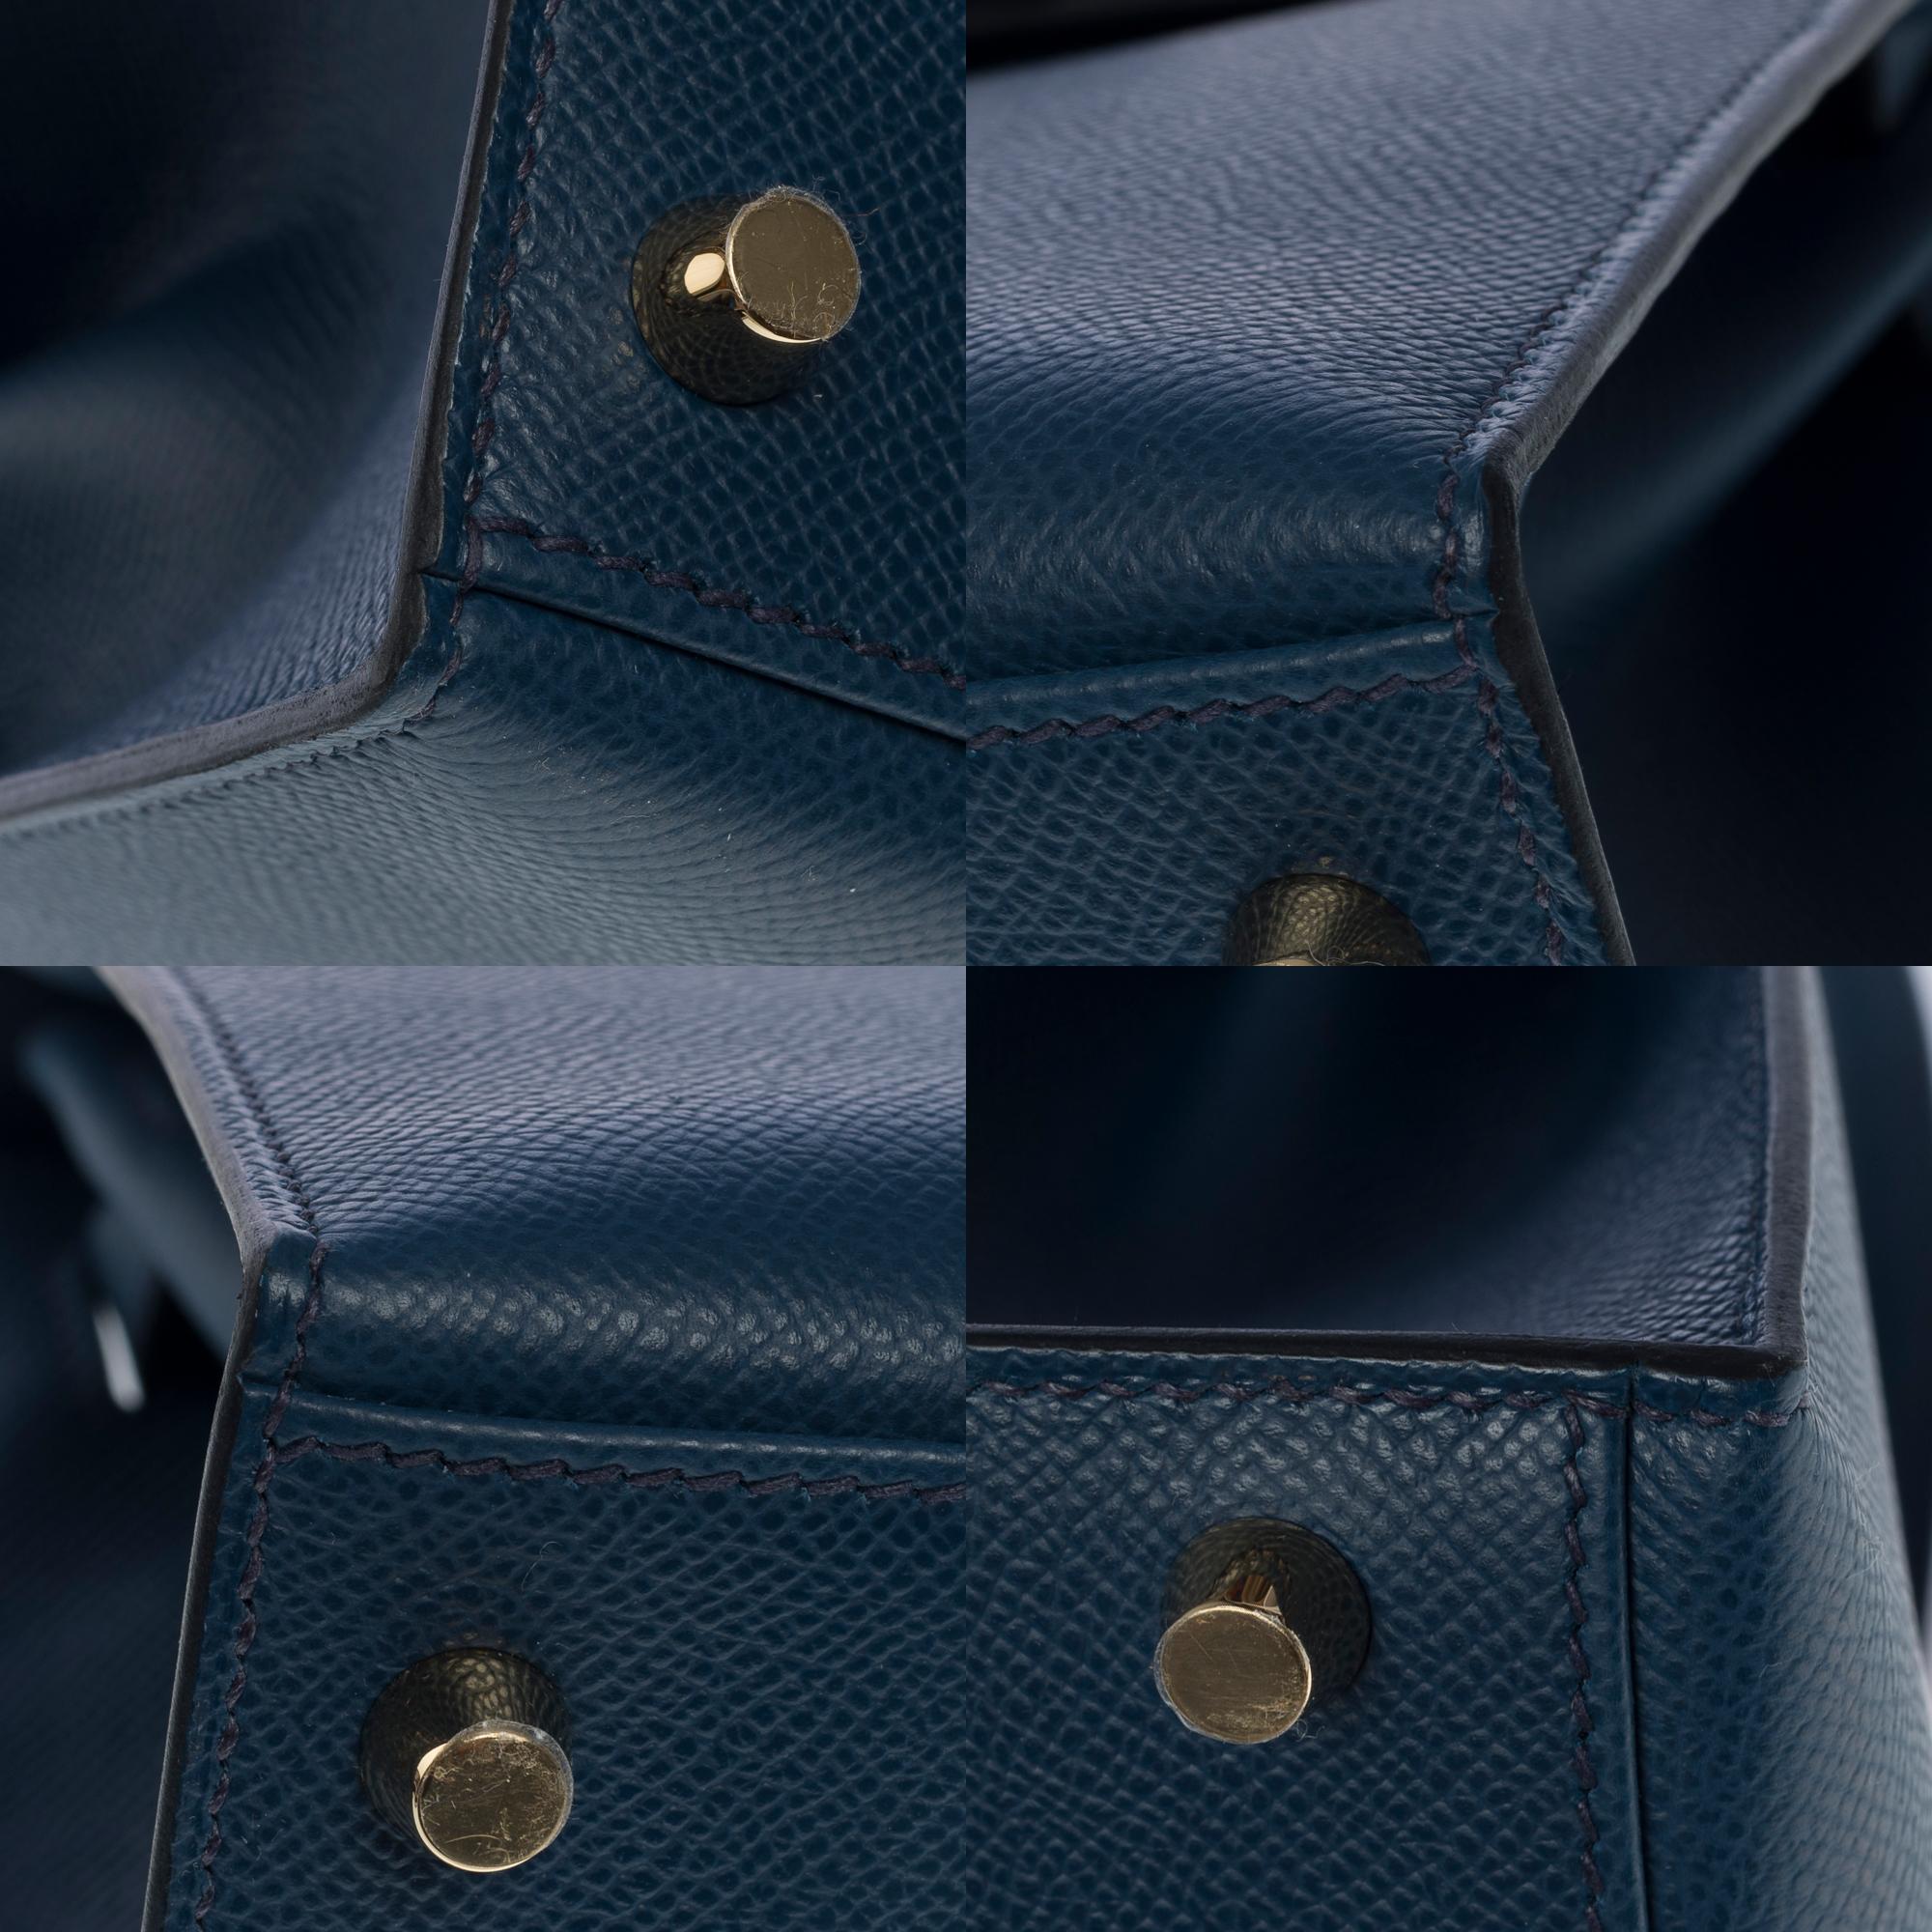 New Hermès Kelly 28 sellier handbag strap in Prussian blue Epsom leather, GHW 7